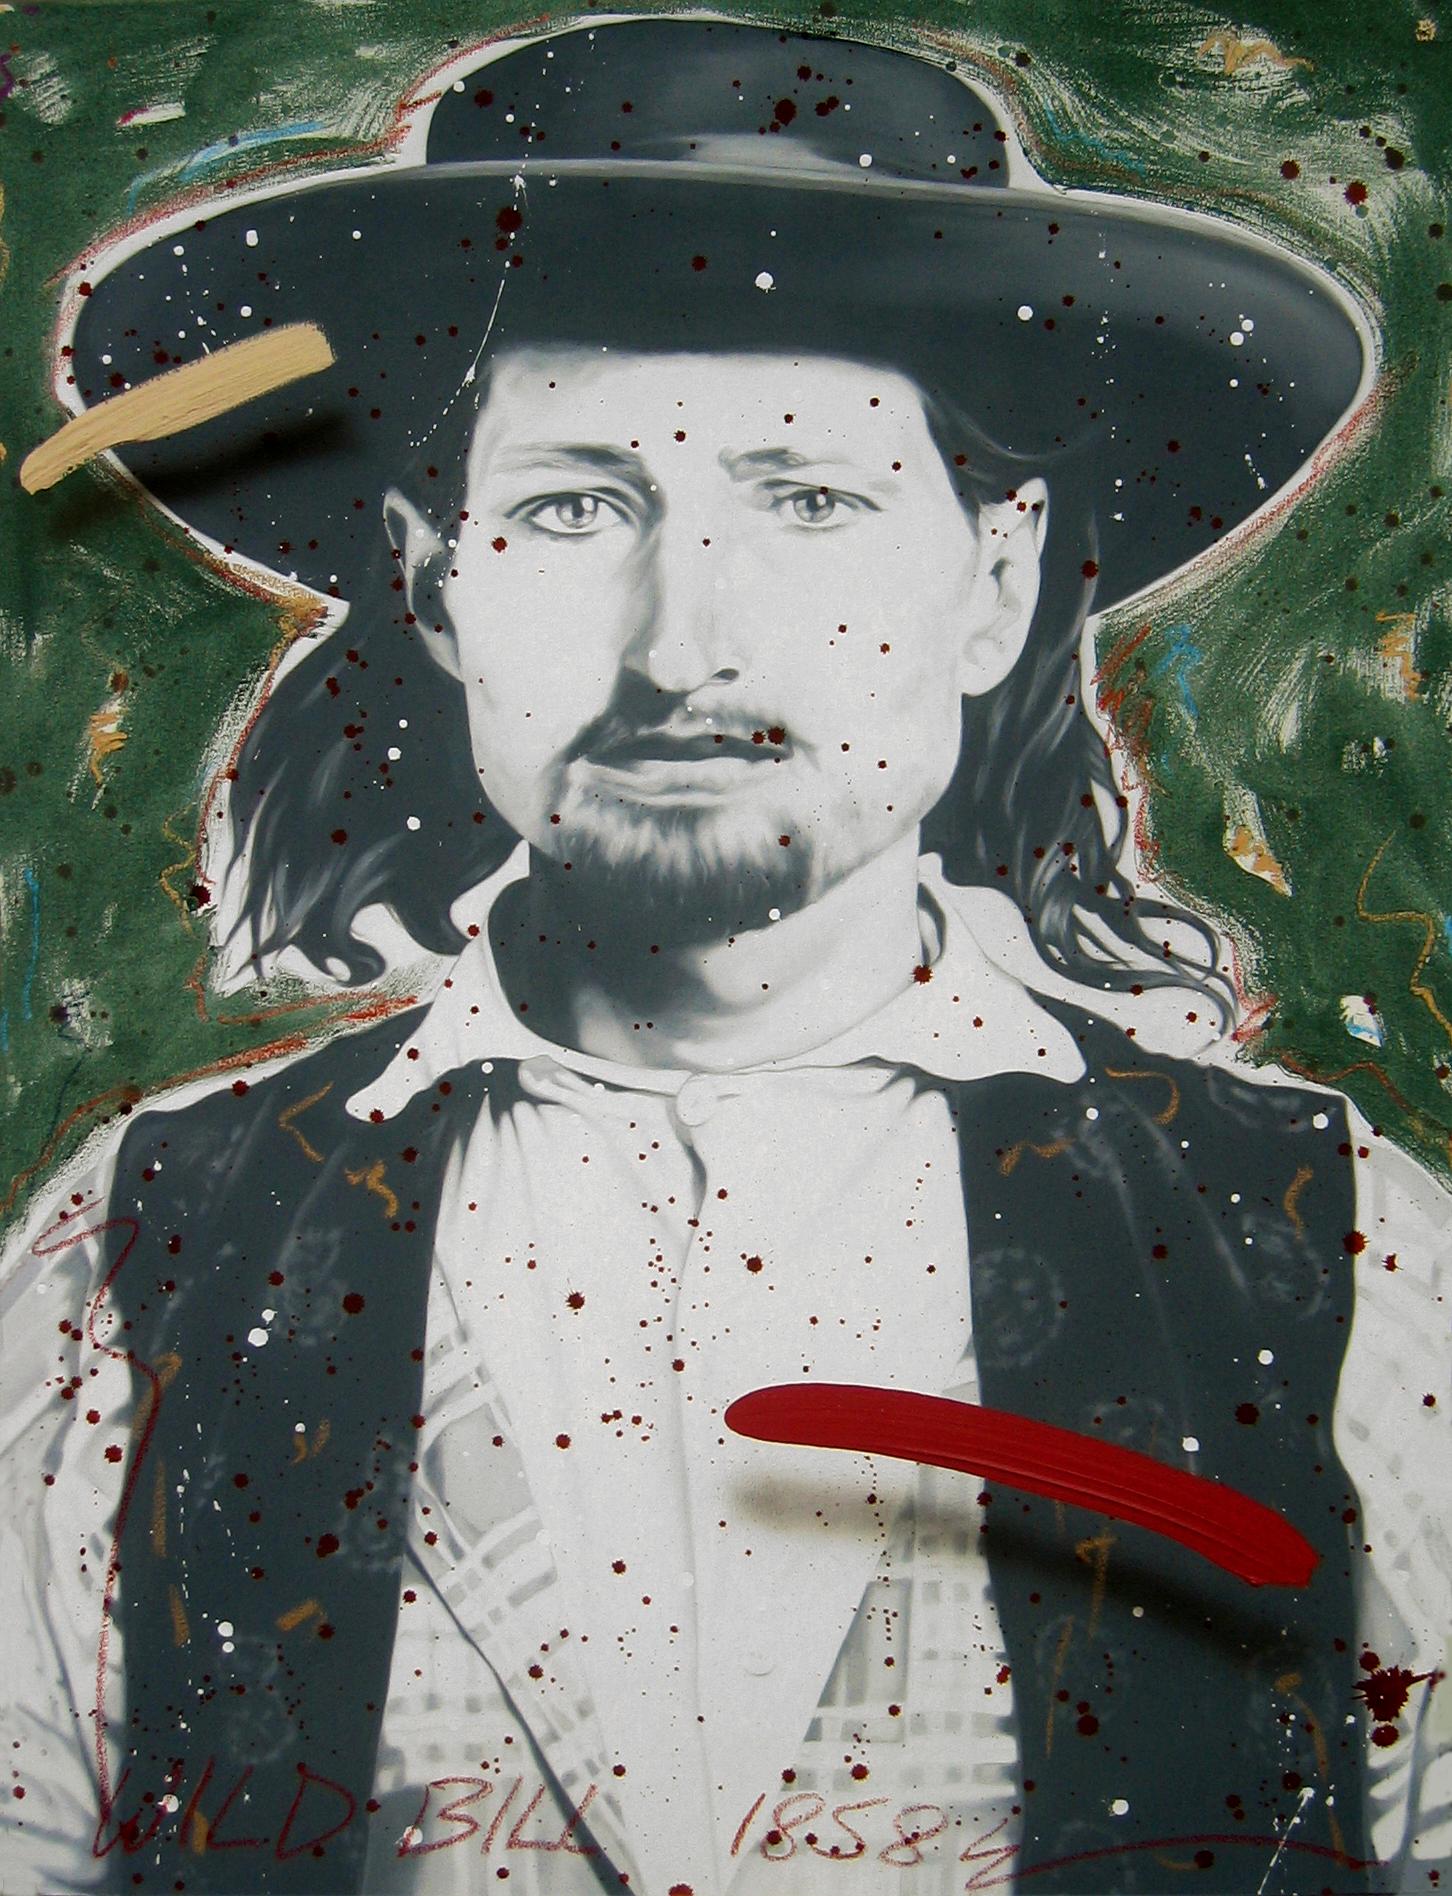 Ceravolo Portrait Painting - "Wild Bill Hickok 1853", Wild West Deadwood, large 53x40" oil canvas western art